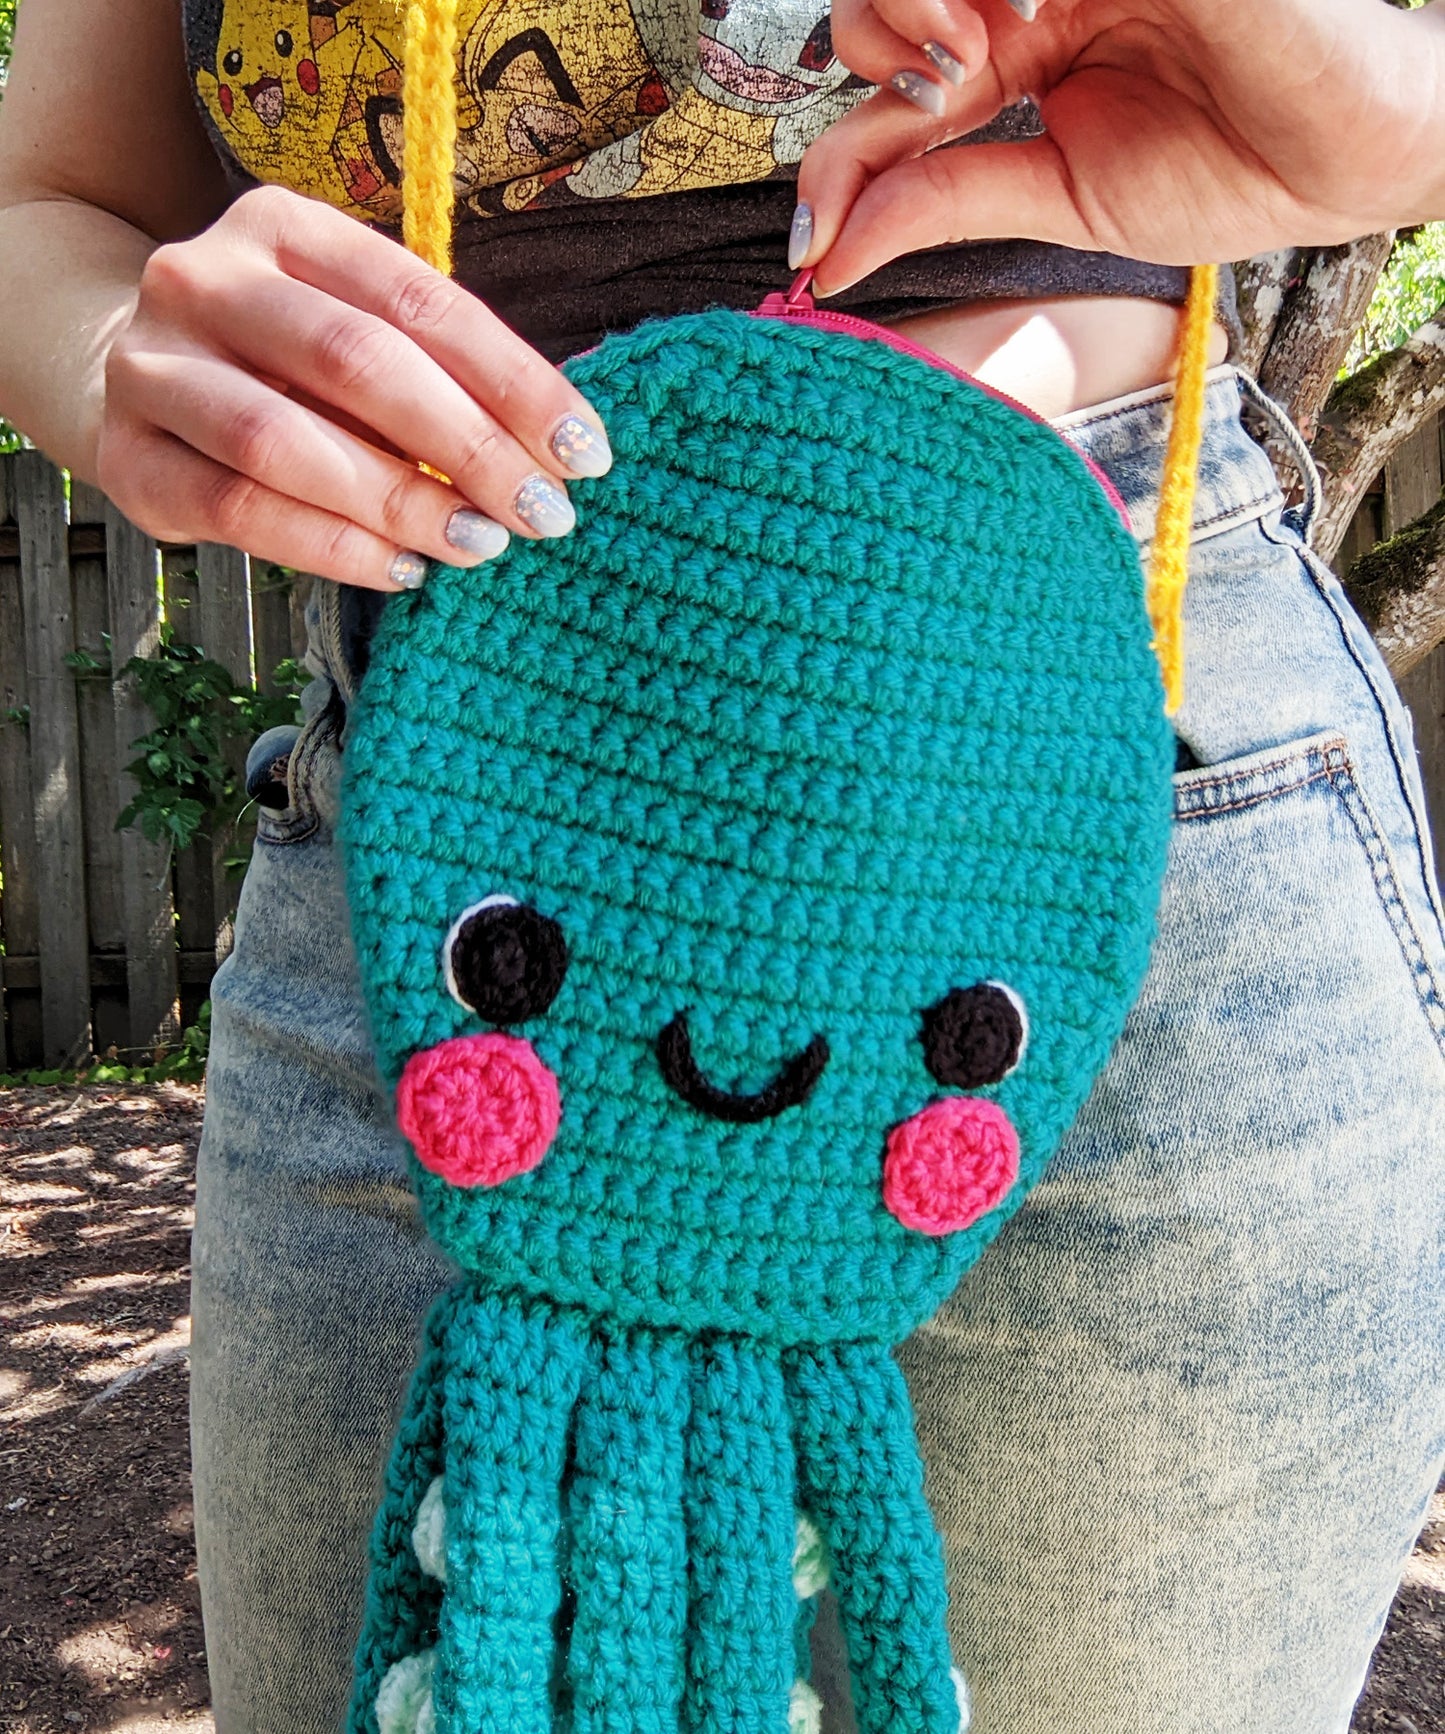 Octopus Crossbody Bag - Hand crocheted purse - Sample Sale